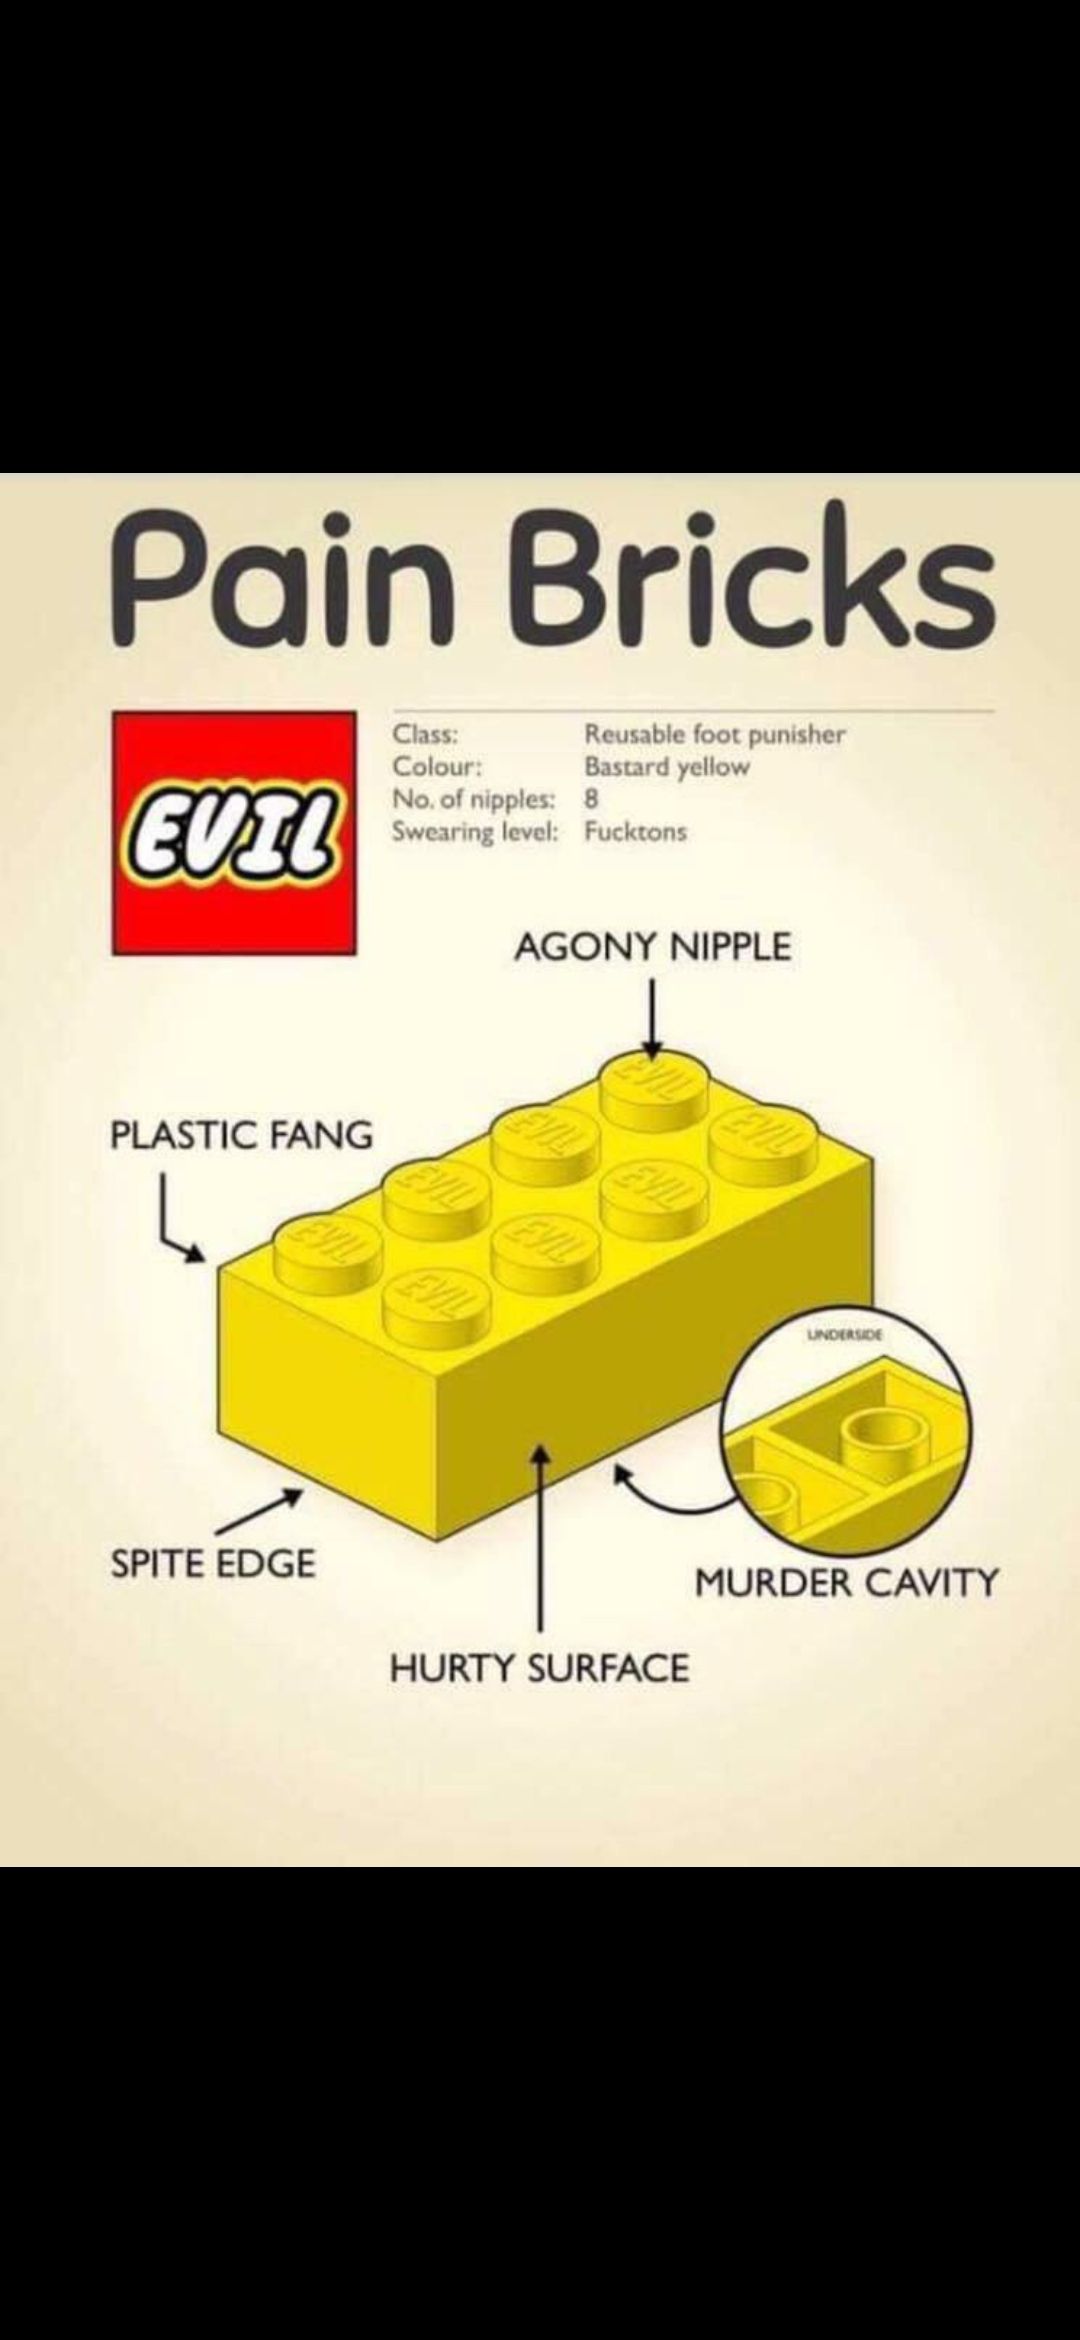 The anatomy of a lego brick